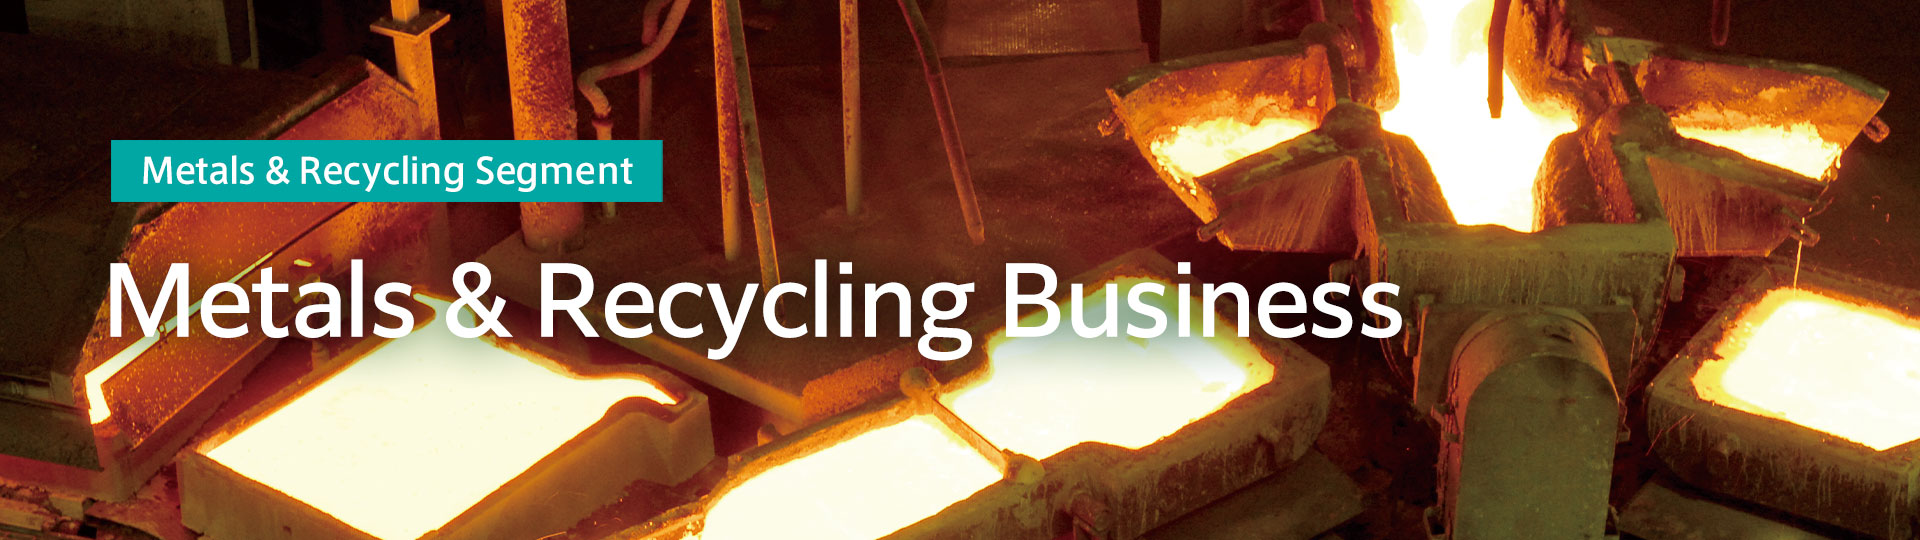 Metals & Recycling Segment Metals & Recycling Business